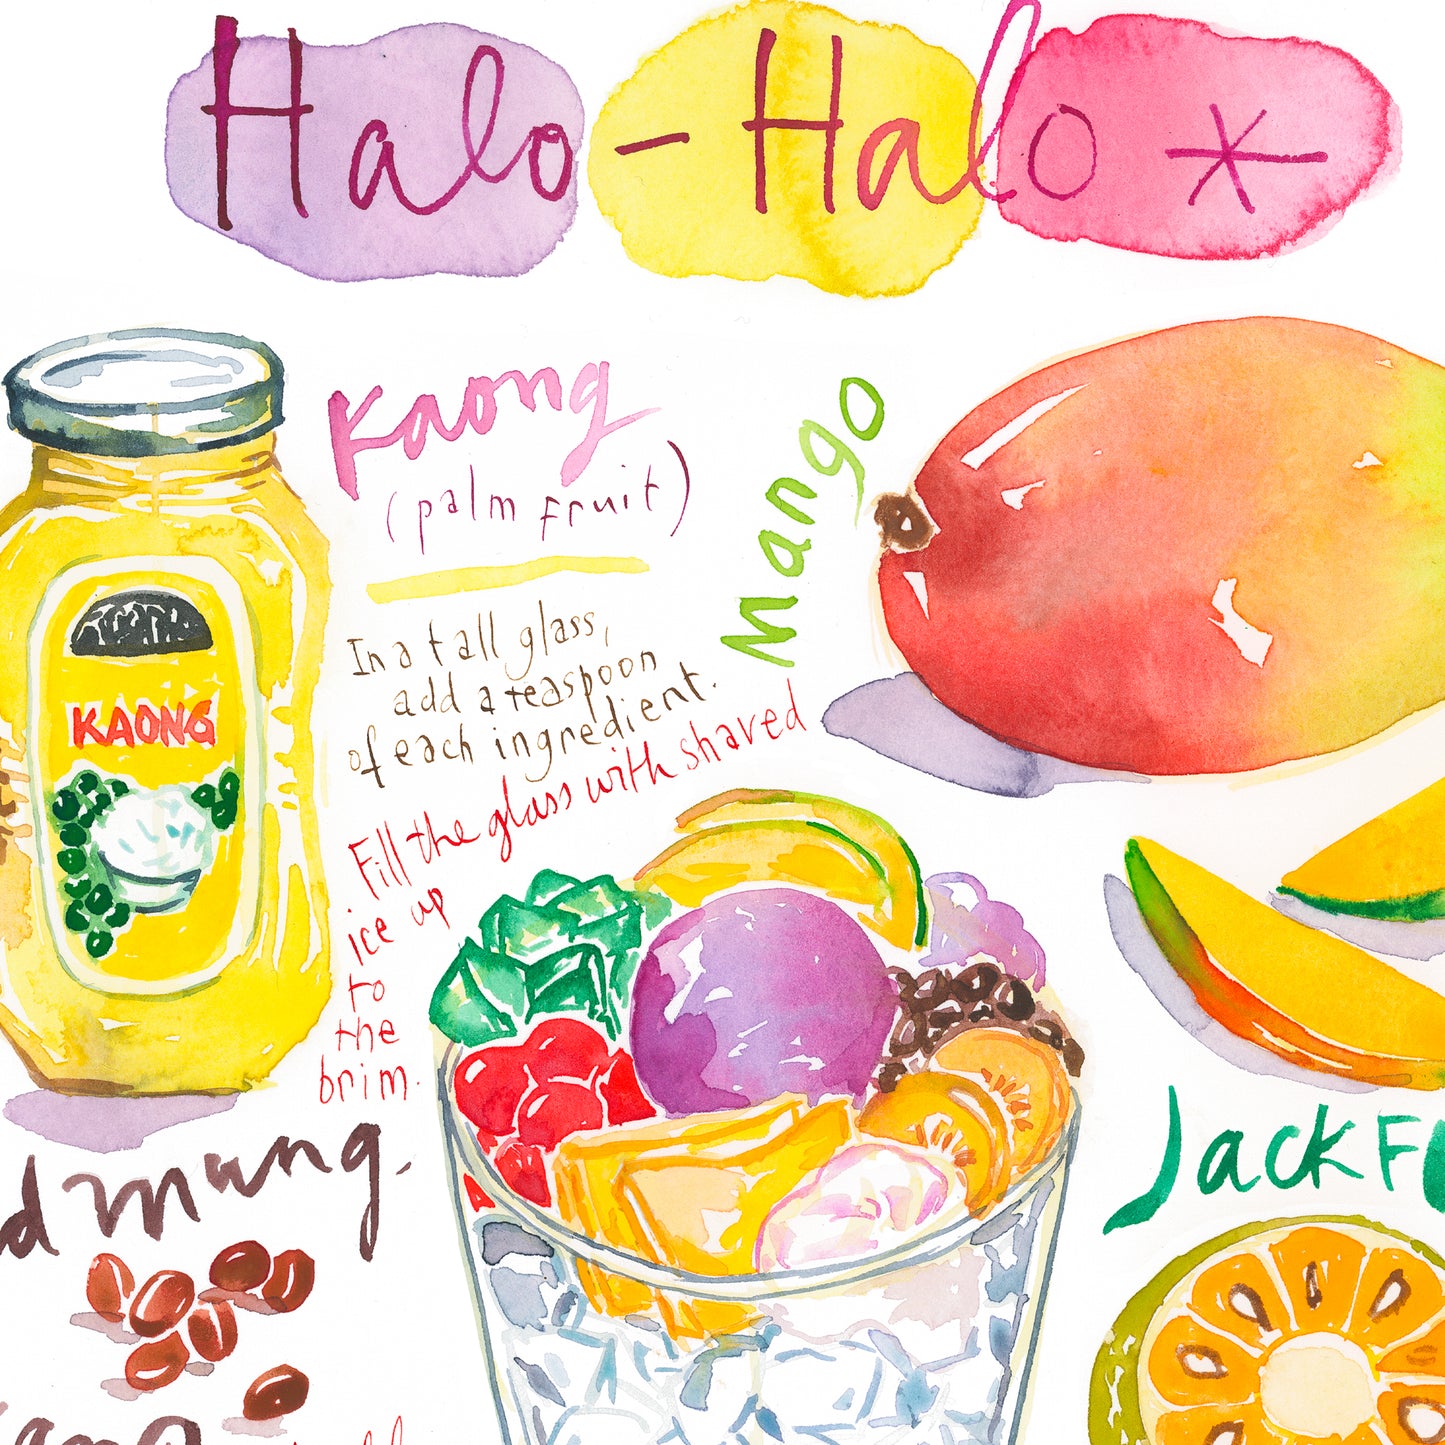 Filipino Halo-Halo recipe